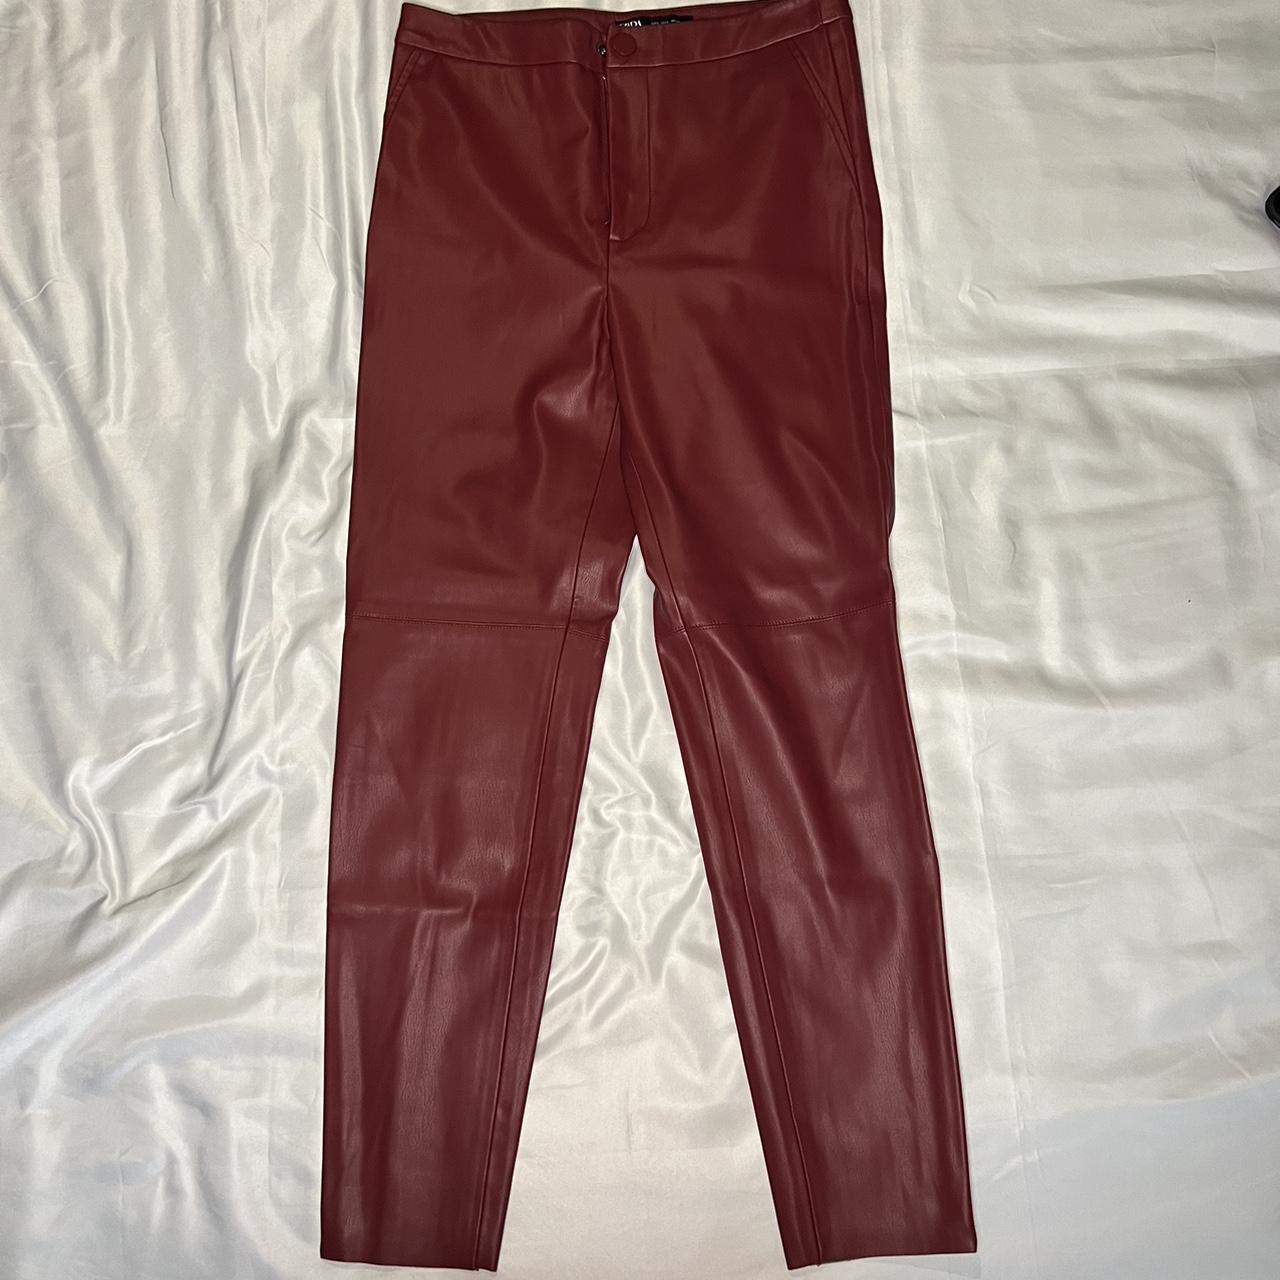 Zara Cherry red wine high waisted leather pants 2... - Depop